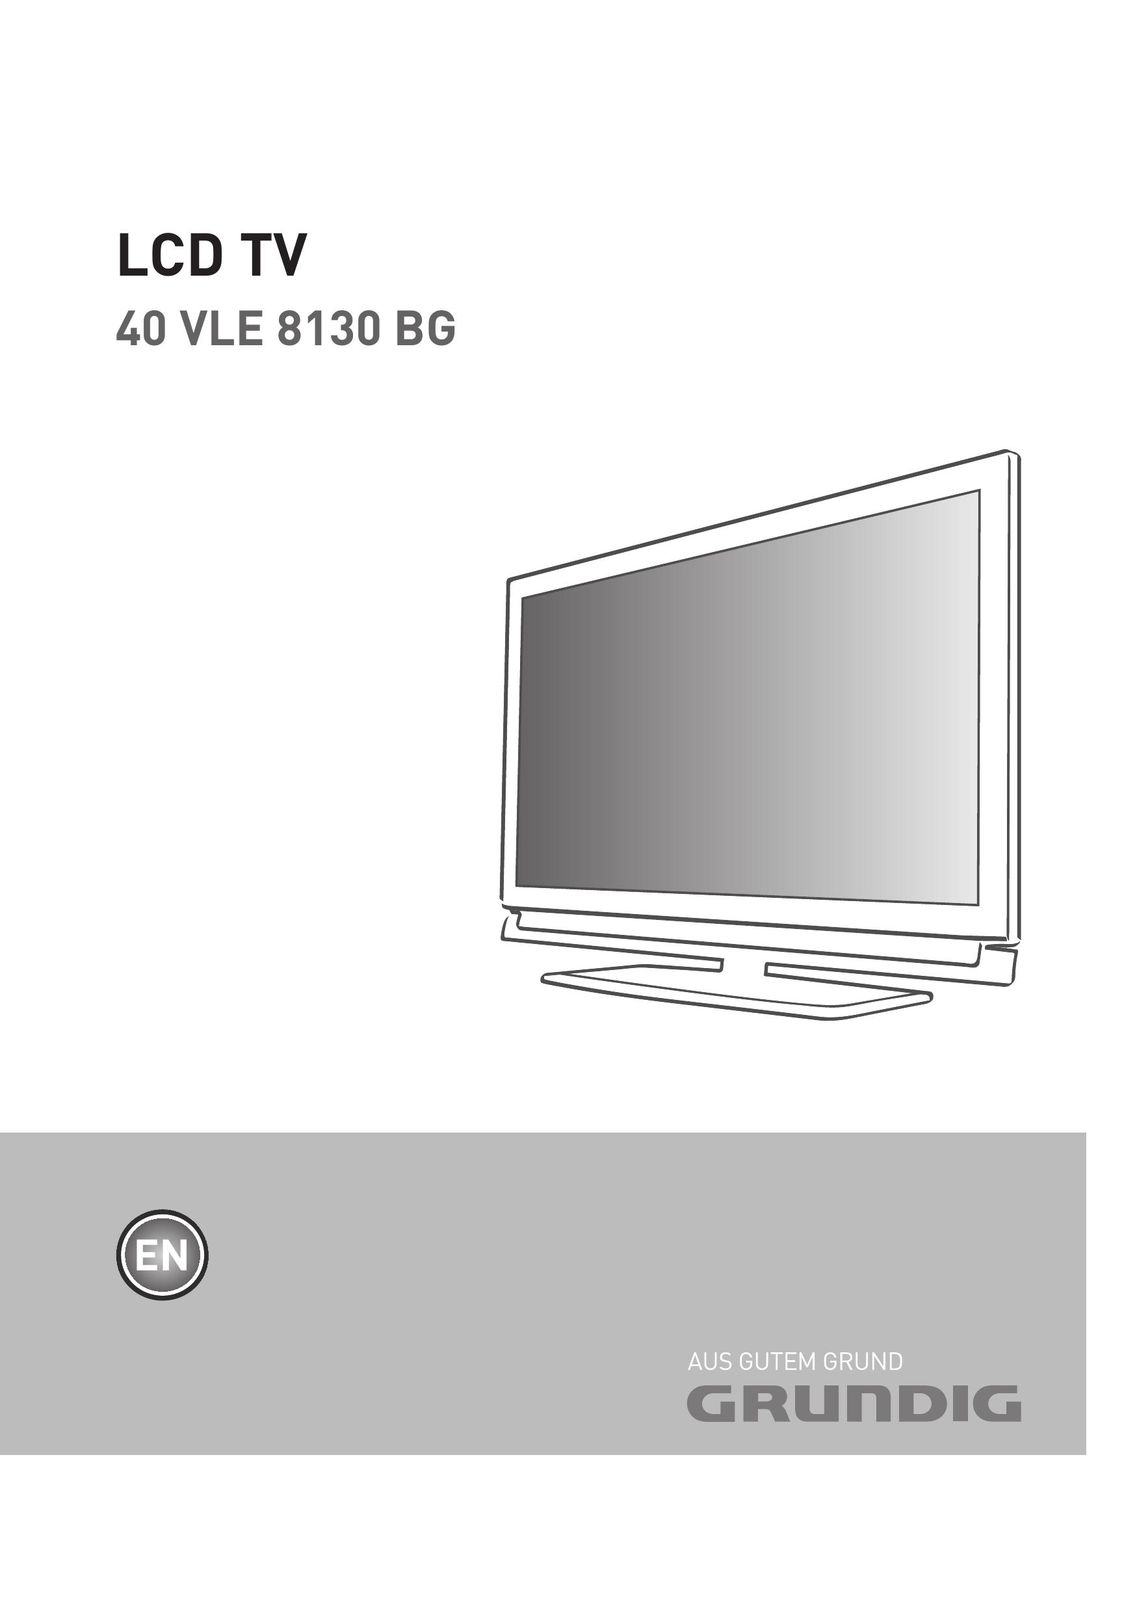 Grundig 40 VLE 8130 BG Flat Panel Television User Manual